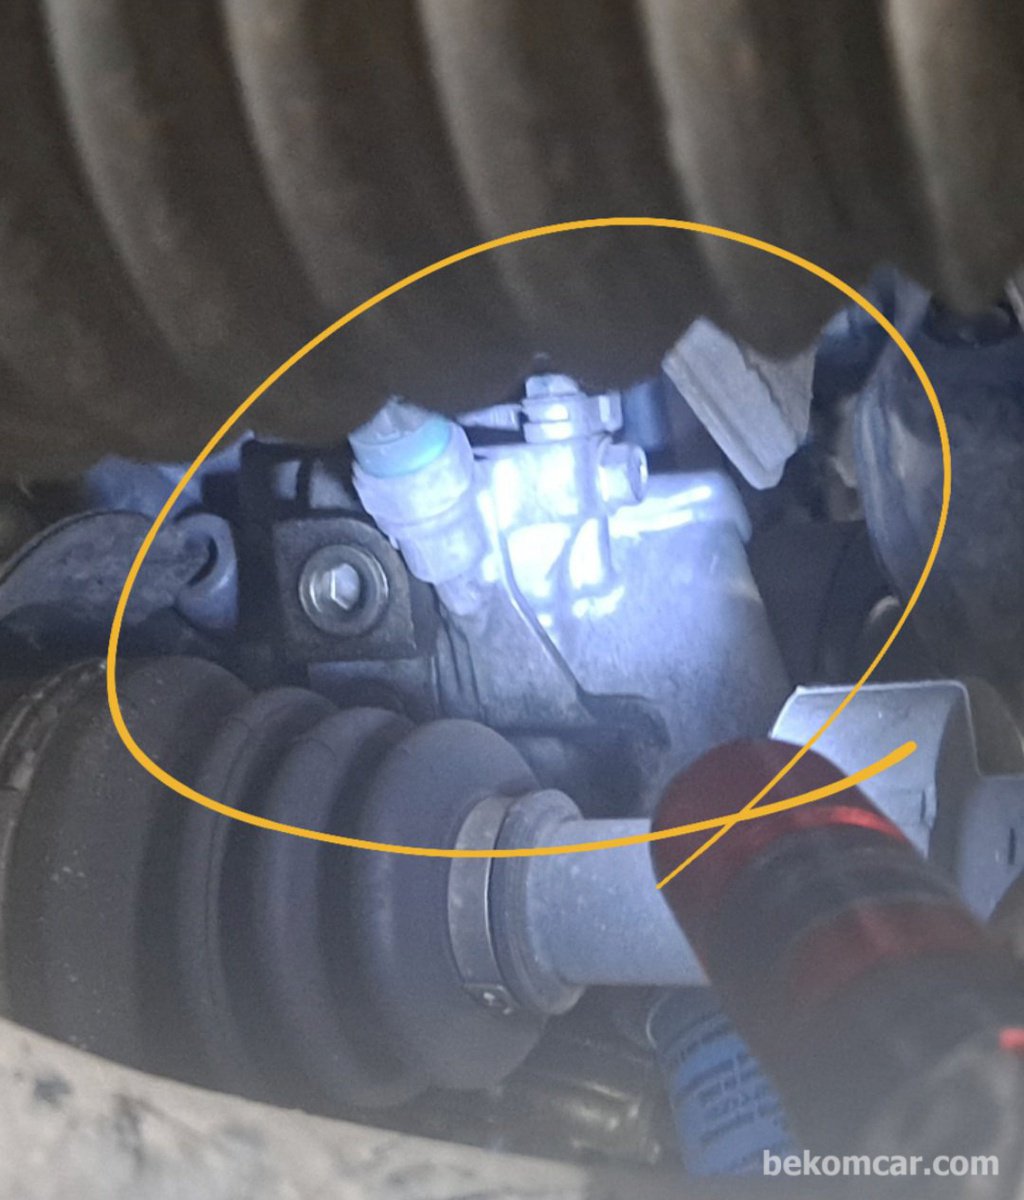 Used car inspection of common problem, Acura VTEC valve|bekomcar.com